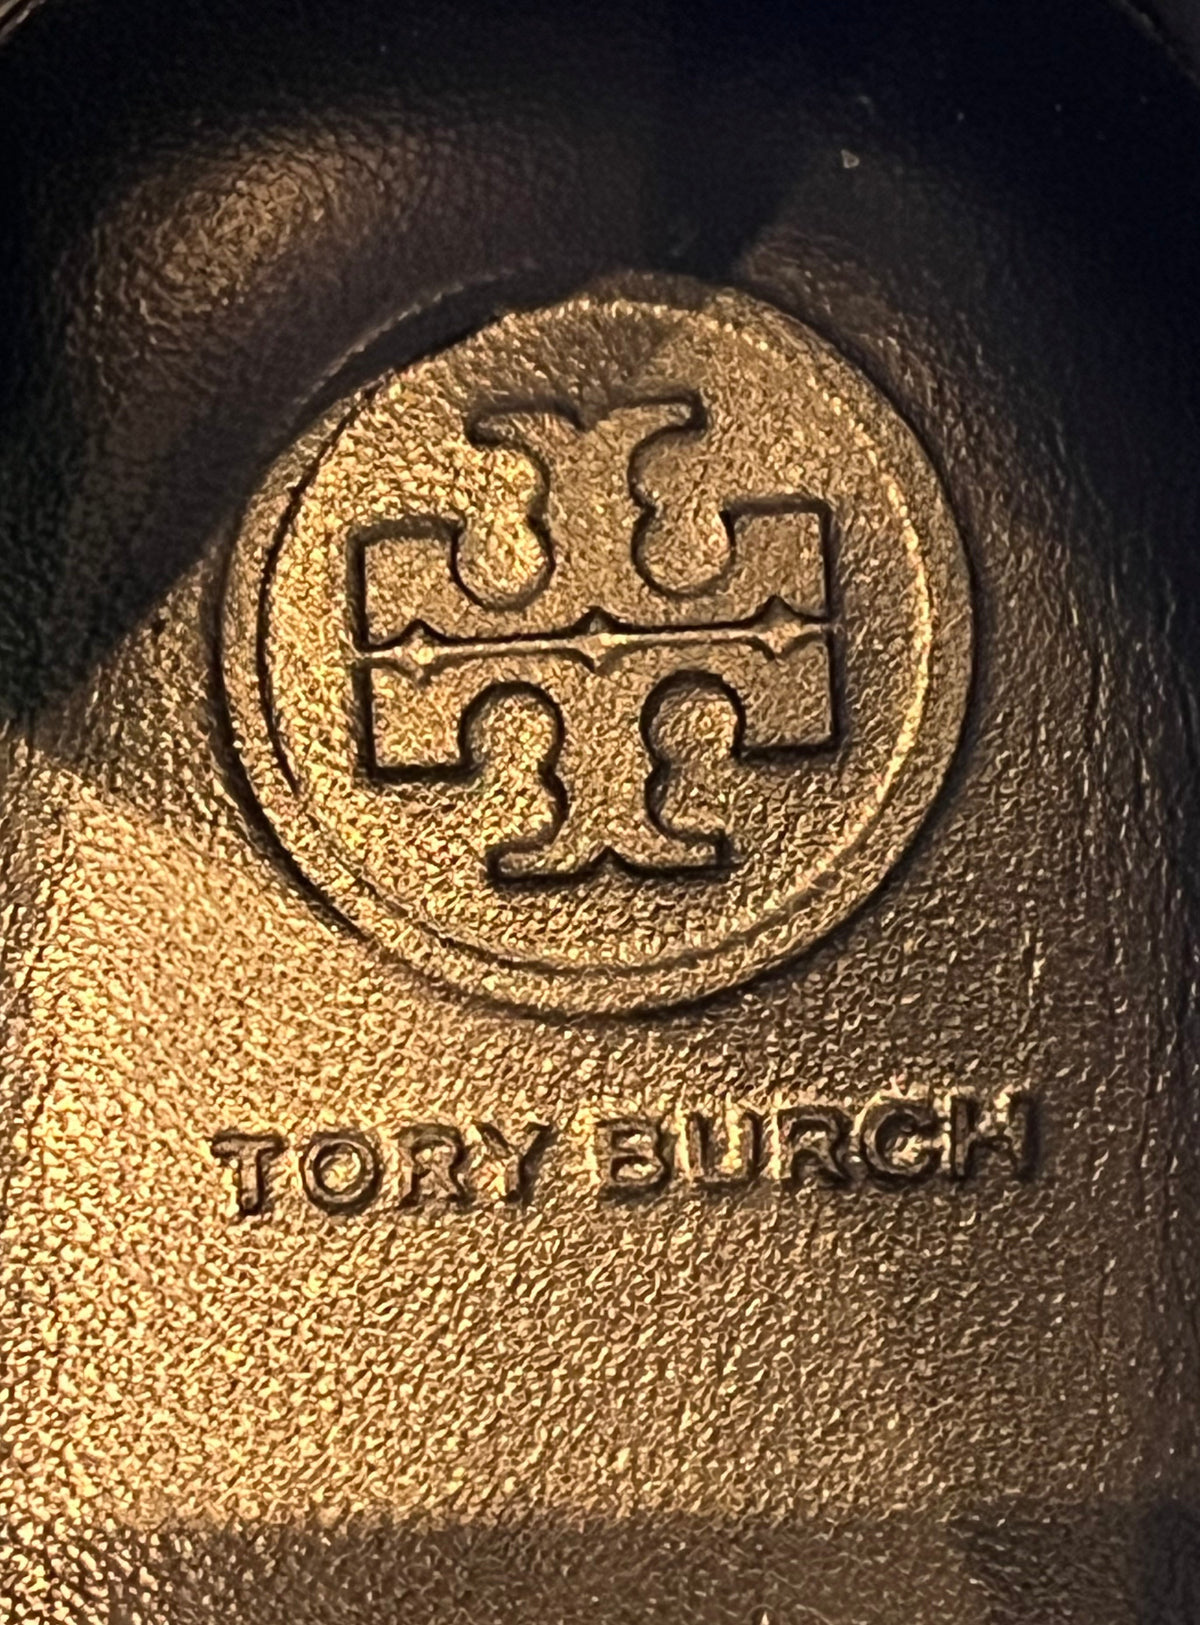 TORY BURCH Black Nylon Sneakers Flower Decal SZ 10